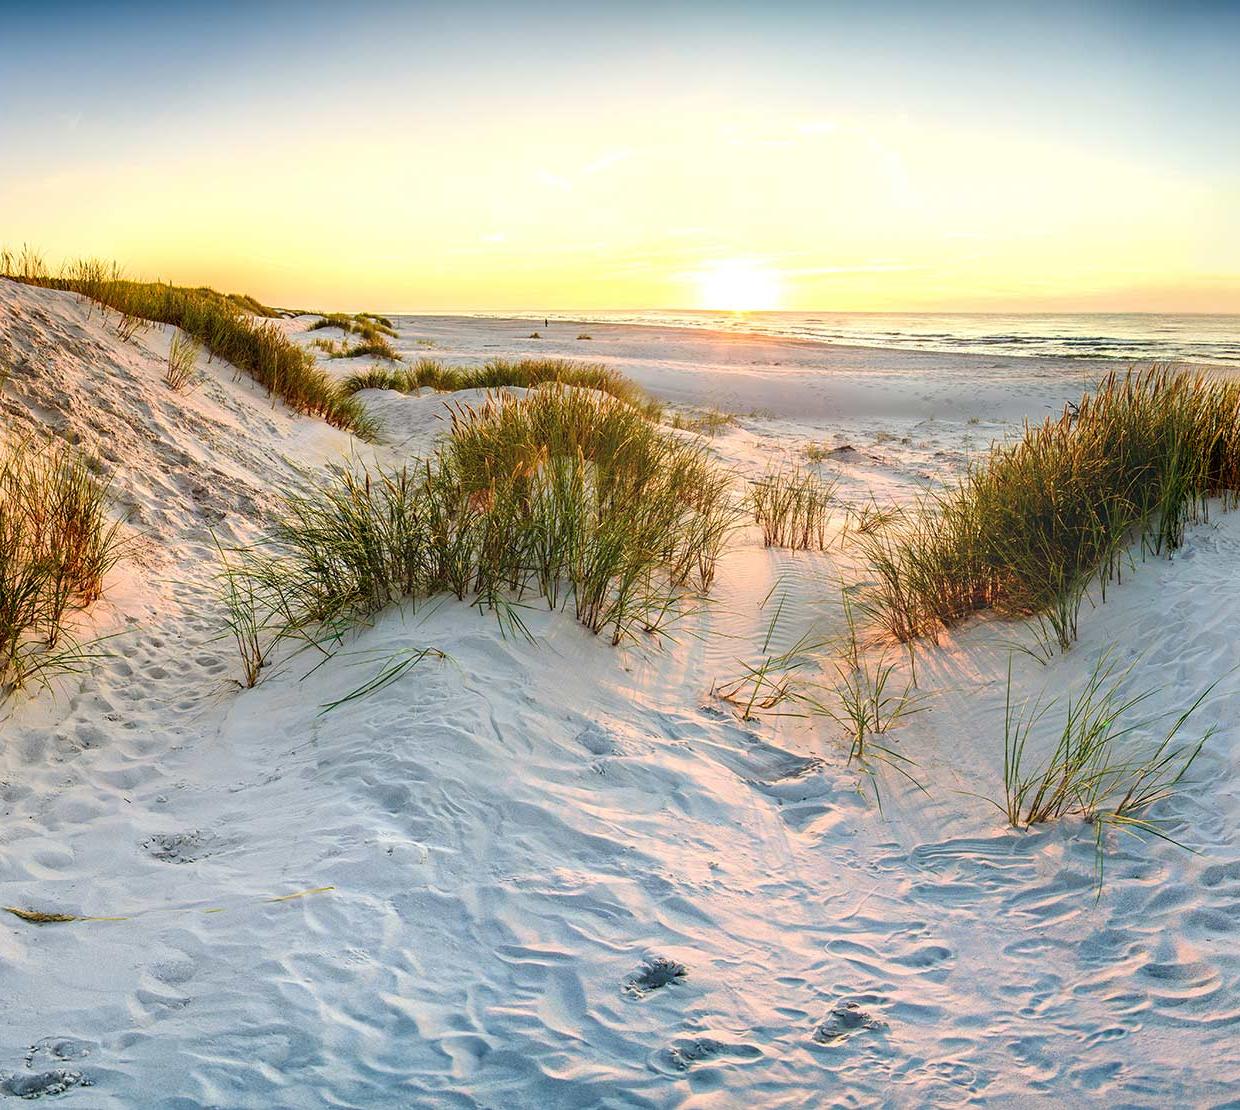 Oregon coast sand dunes on beach during sunset